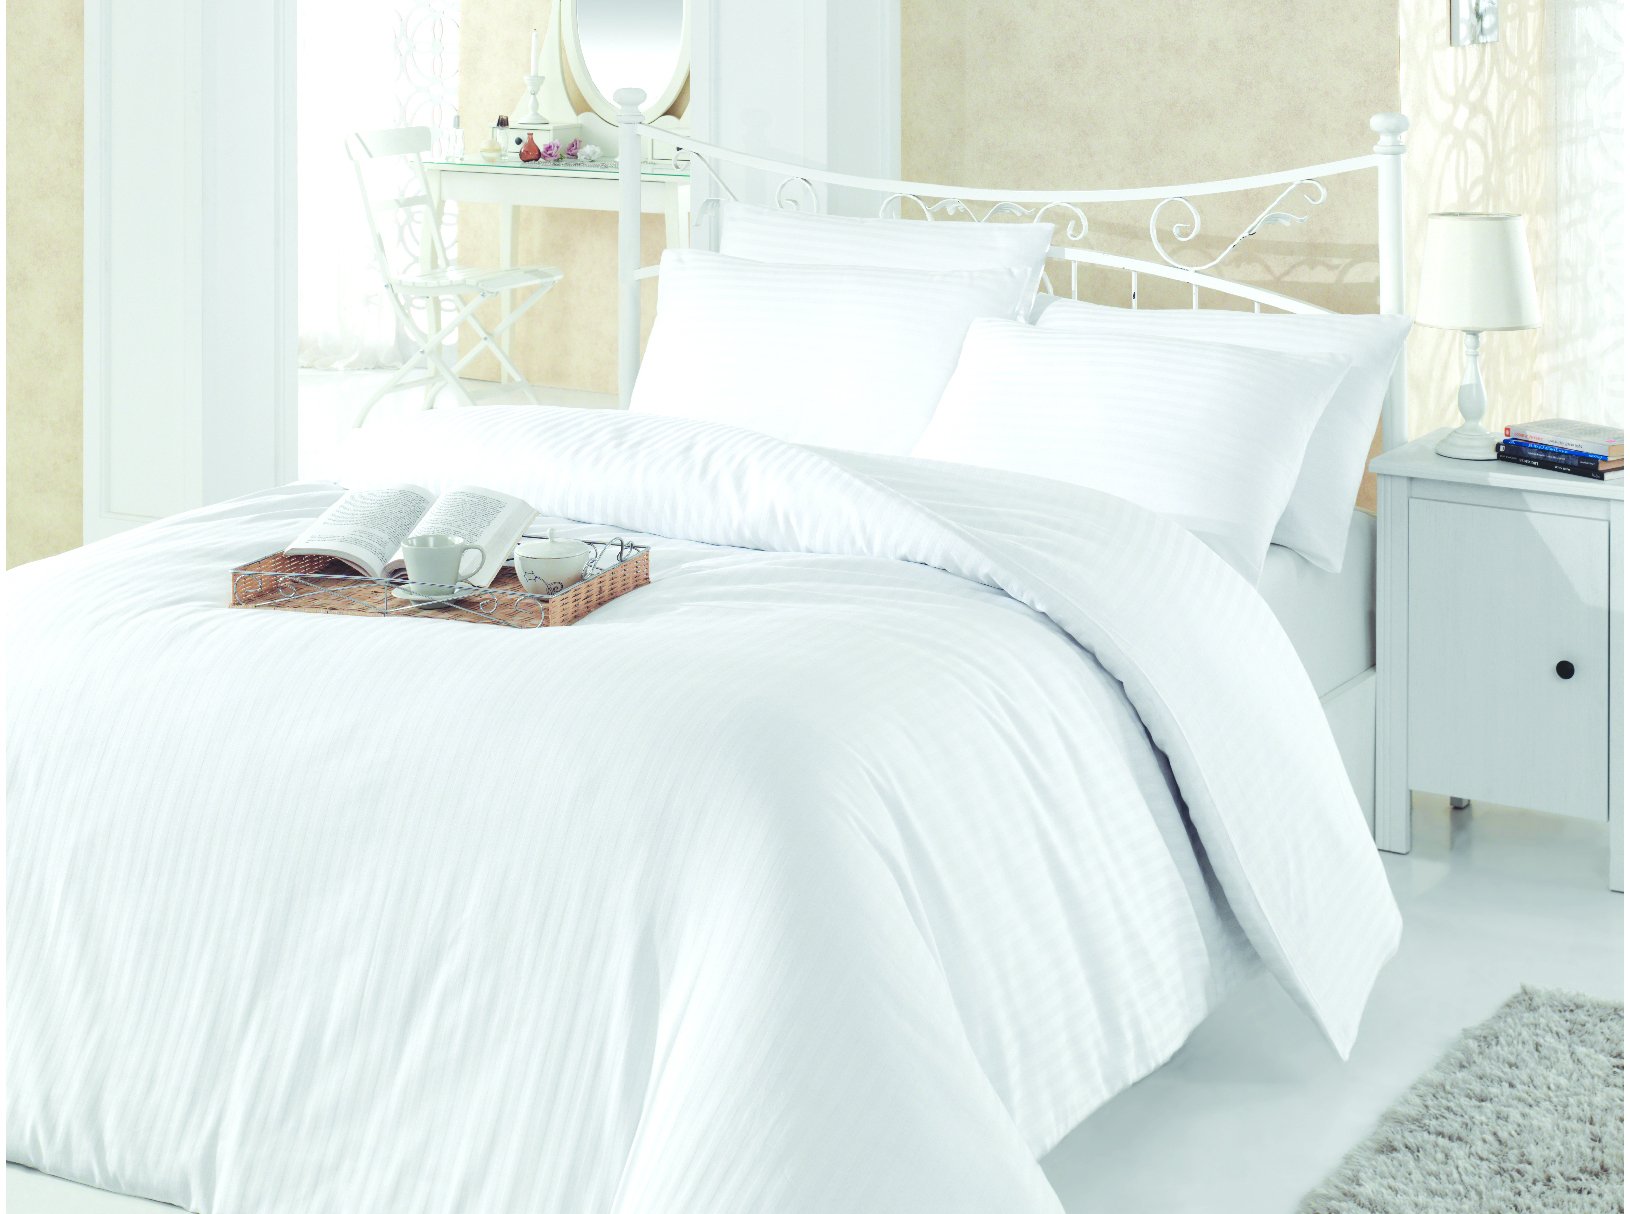 40x60 Hotelska jastučnica satenska bela na pruge Cottonbox